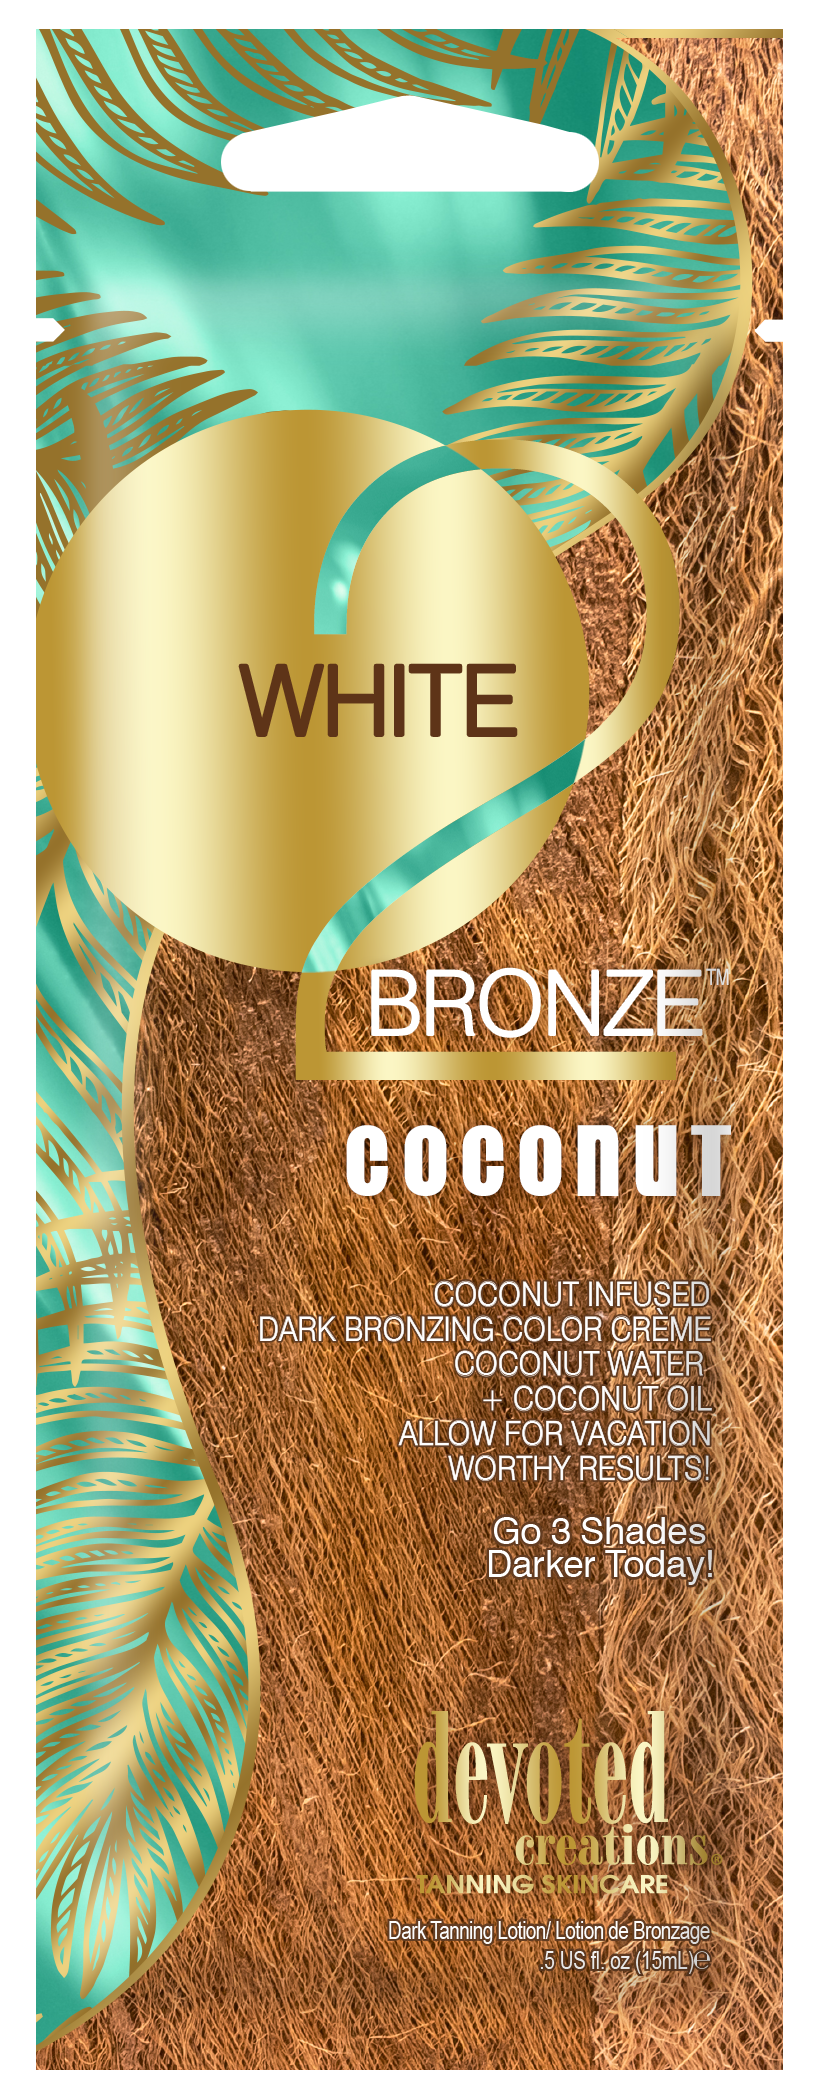 Devoted Creations | White 2 Bronze Coconut